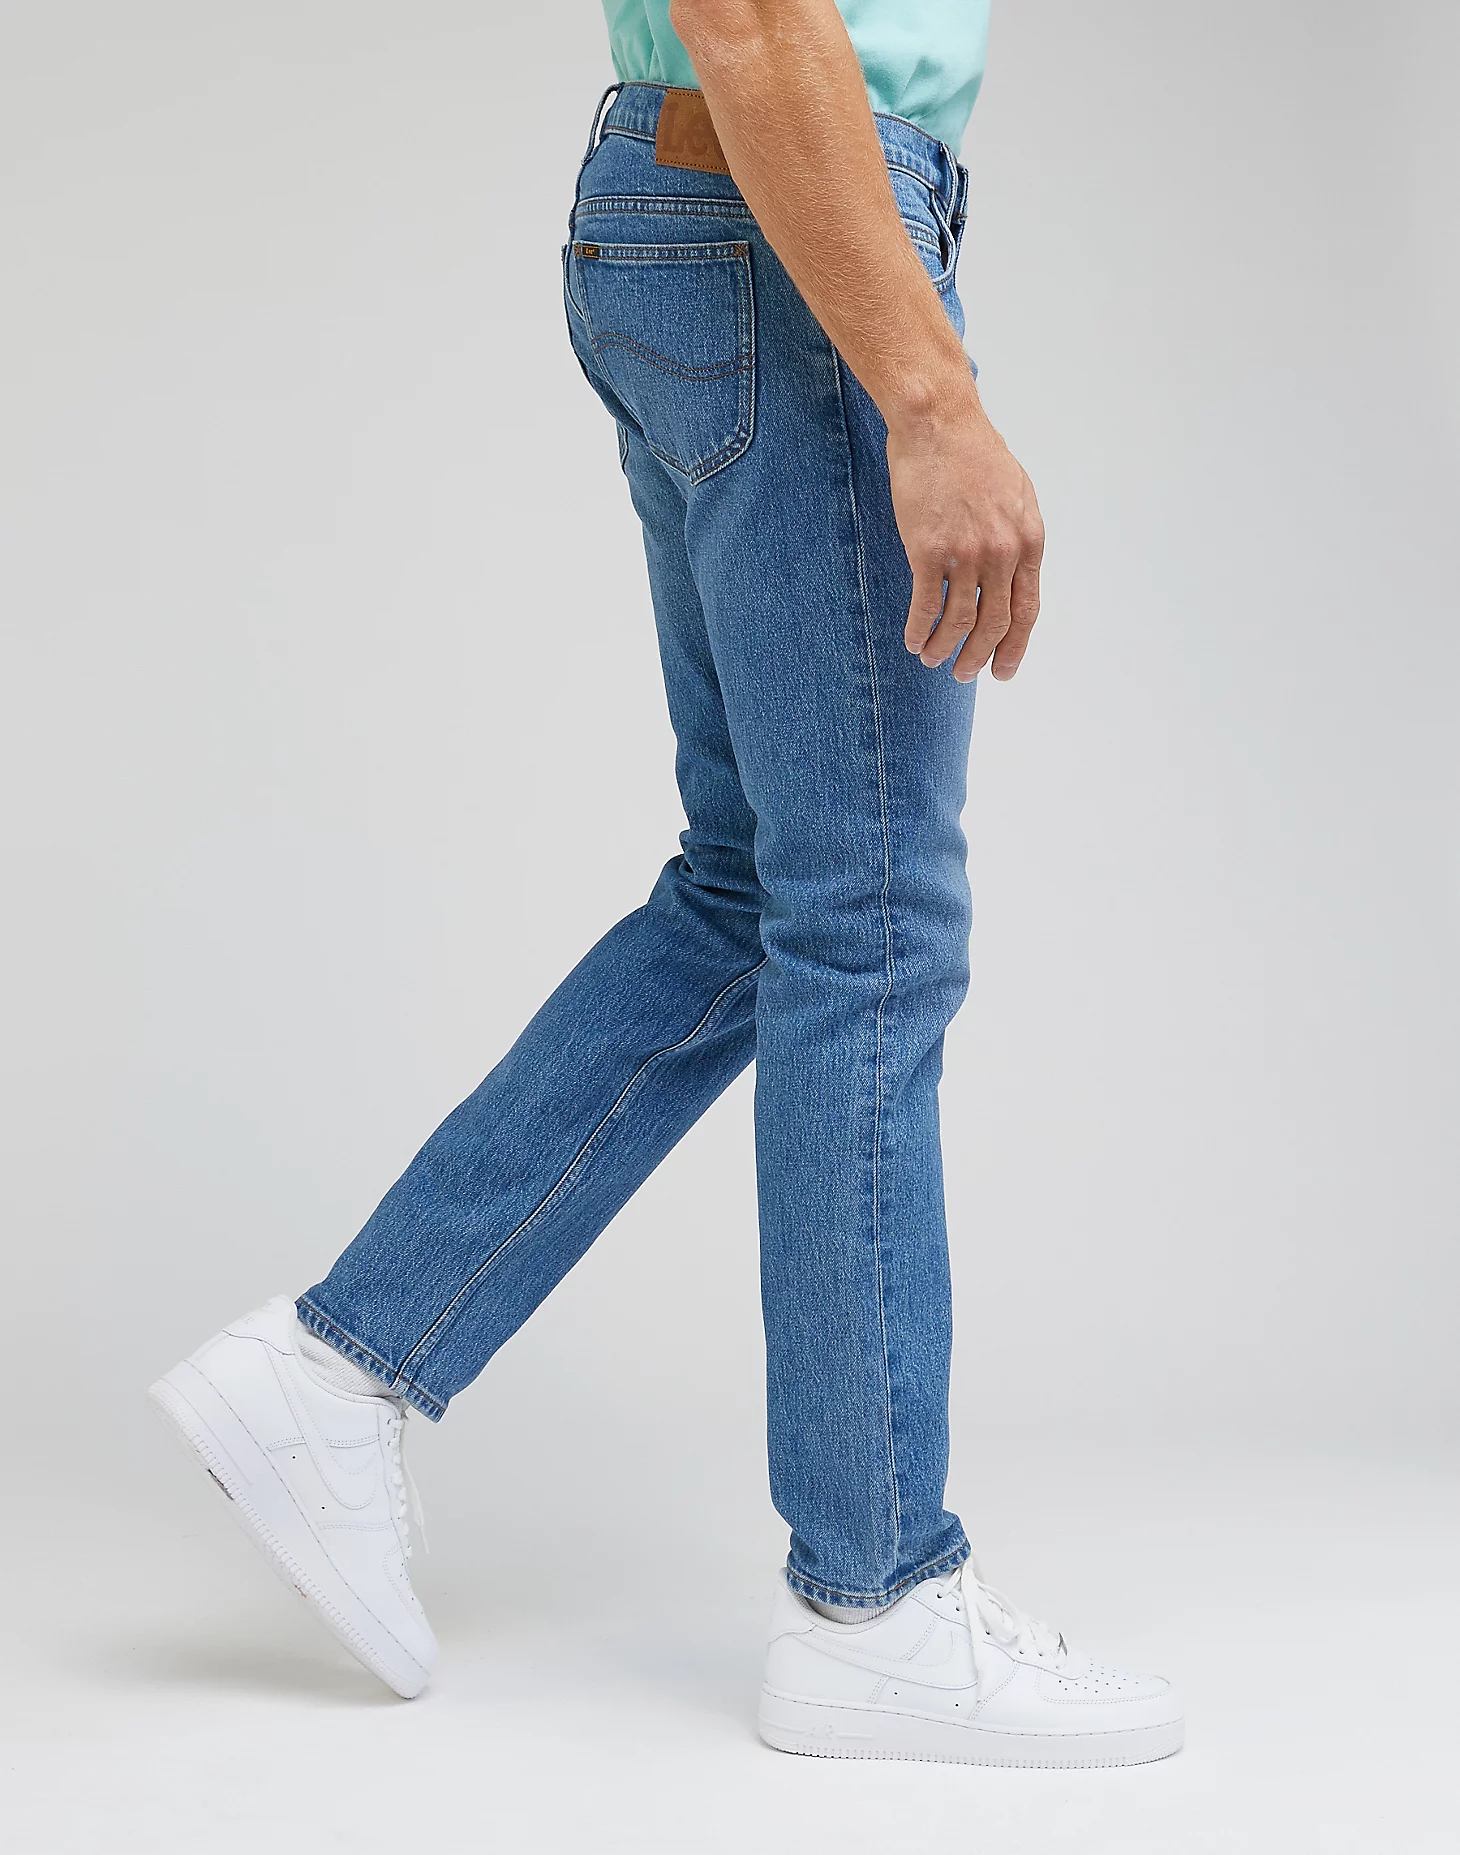 District Concept Store - LEE Rider Jeans Slim Fit Men - Blue Waters  (L701-DX-CP)